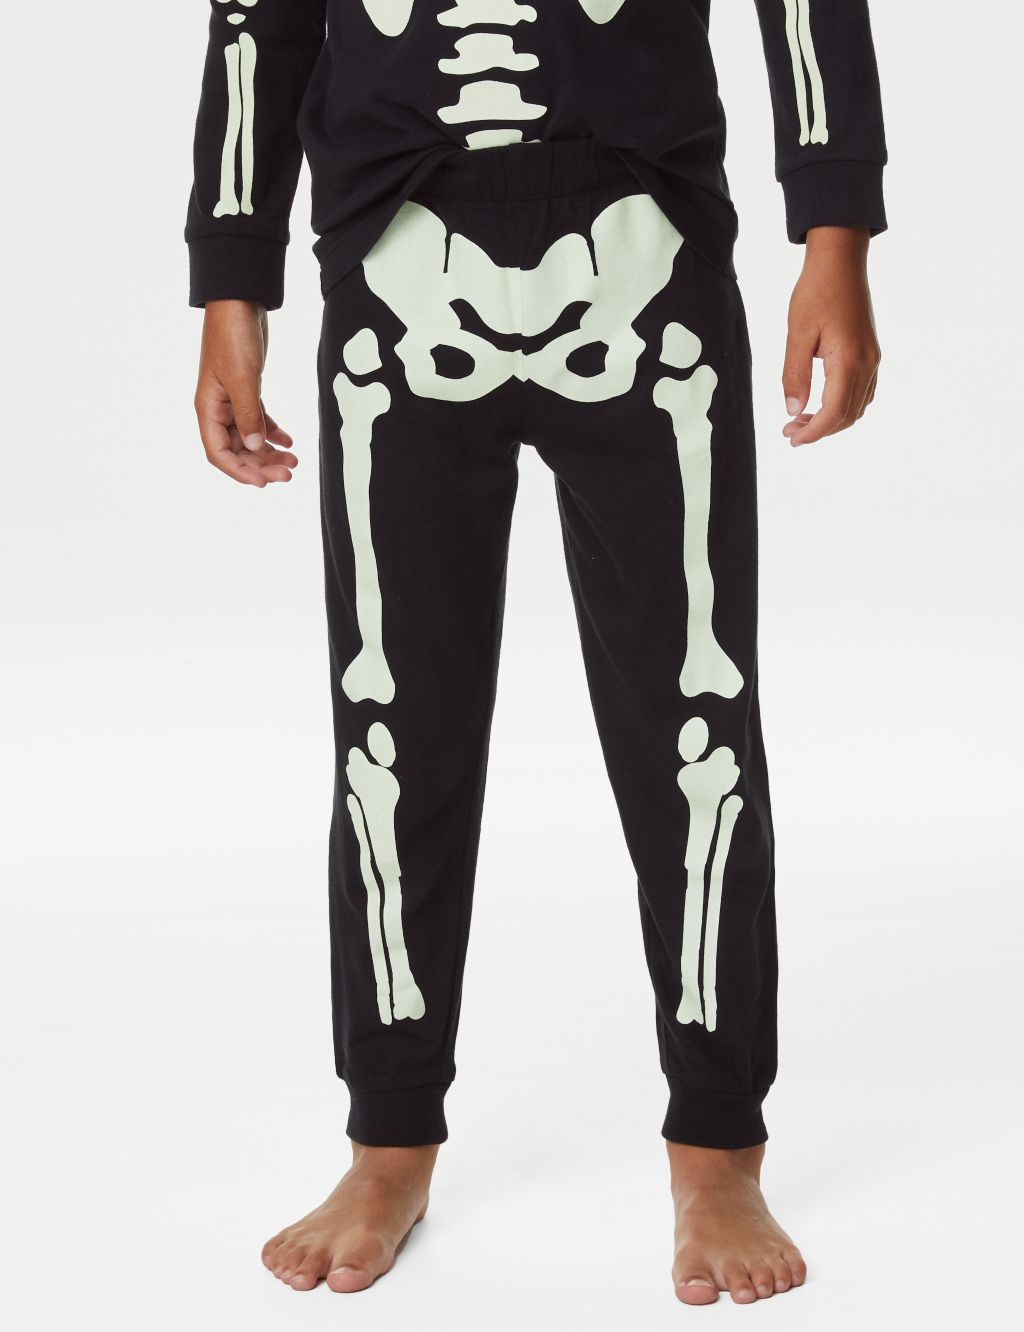 Kids' Glow in the Dark Halloween Skeleton Pyjamas (3-16 Yrs) image 4